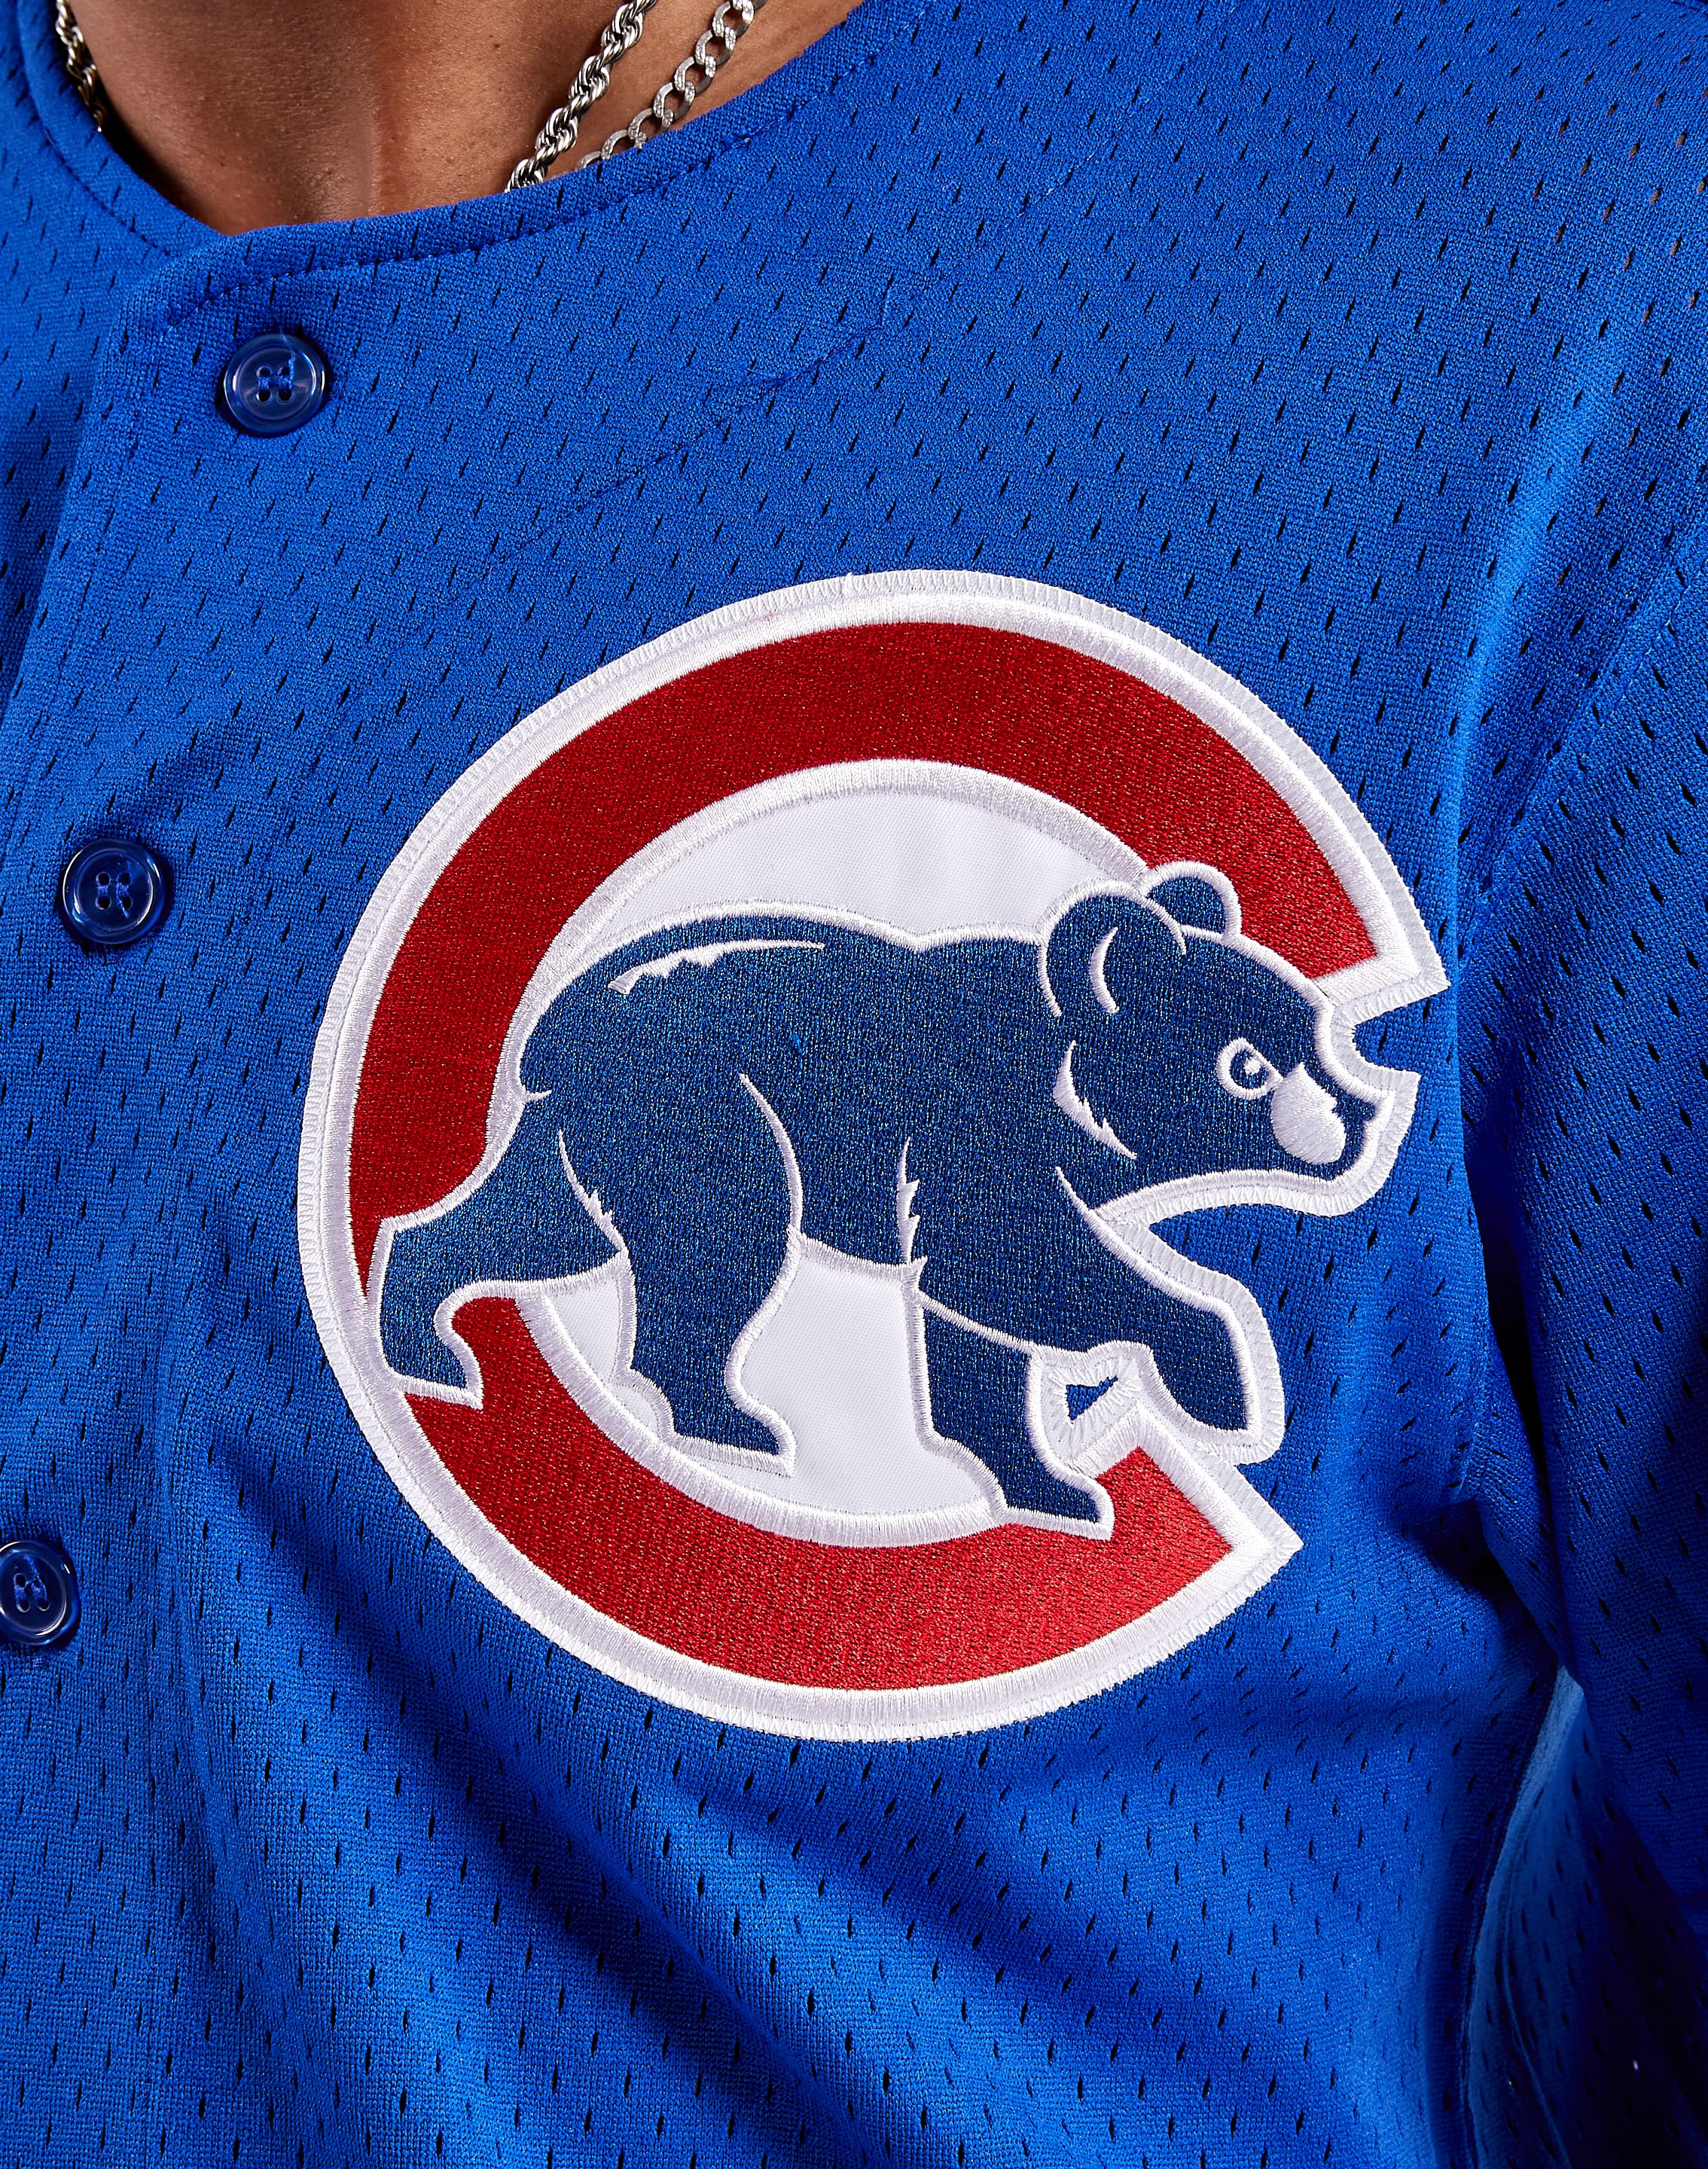 Ryne Sandberg Chicago Cubs Jersey – Classic Authentics